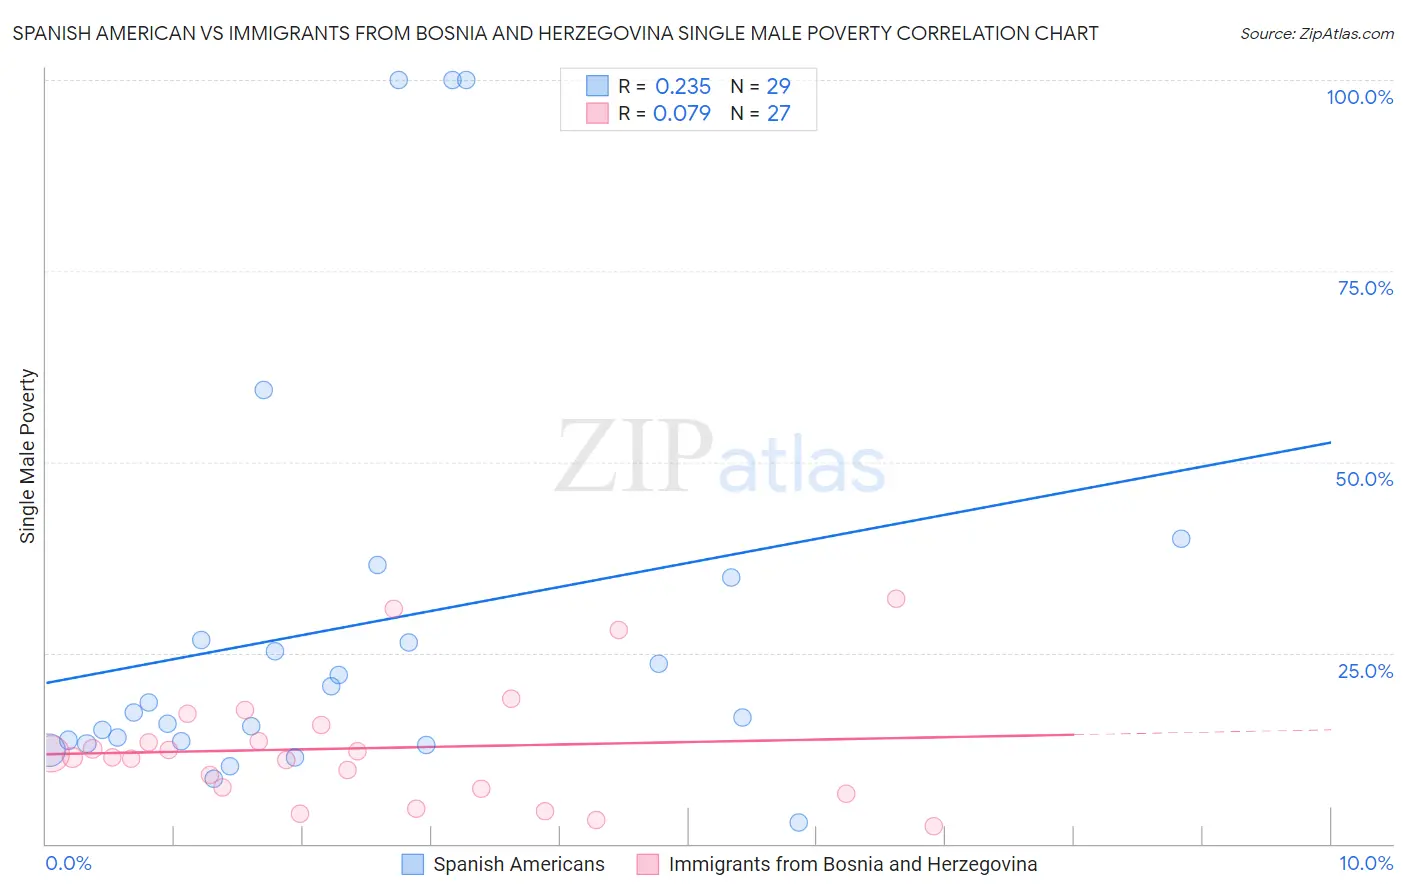 Spanish American vs Immigrants from Bosnia and Herzegovina Single Male Poverty